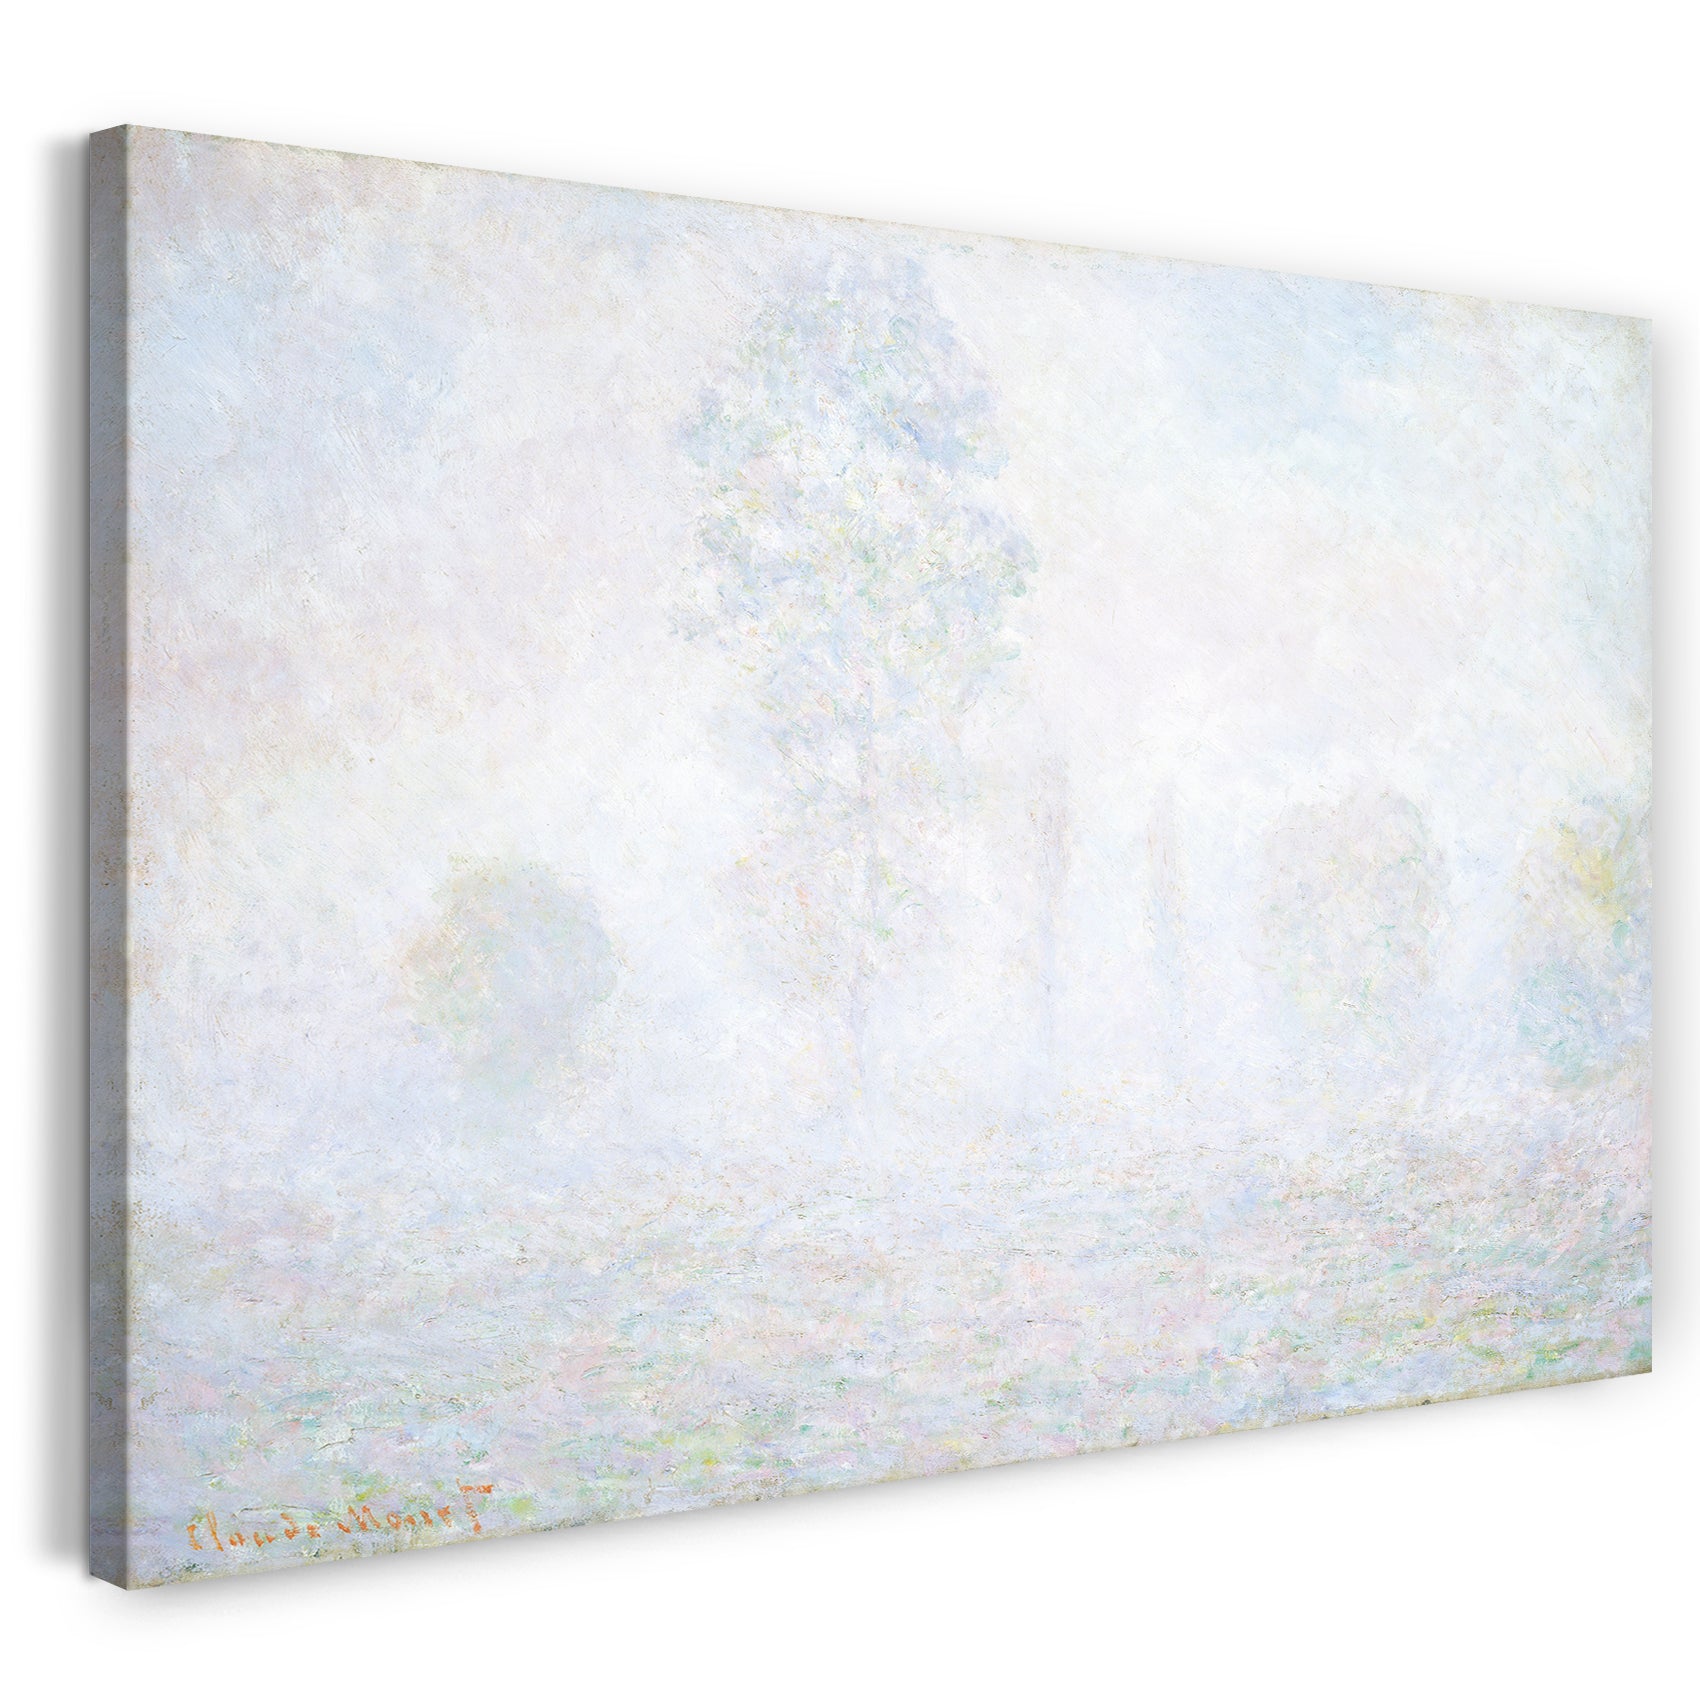 Leinwandbild Claude Monet - Morgennebel (1888)